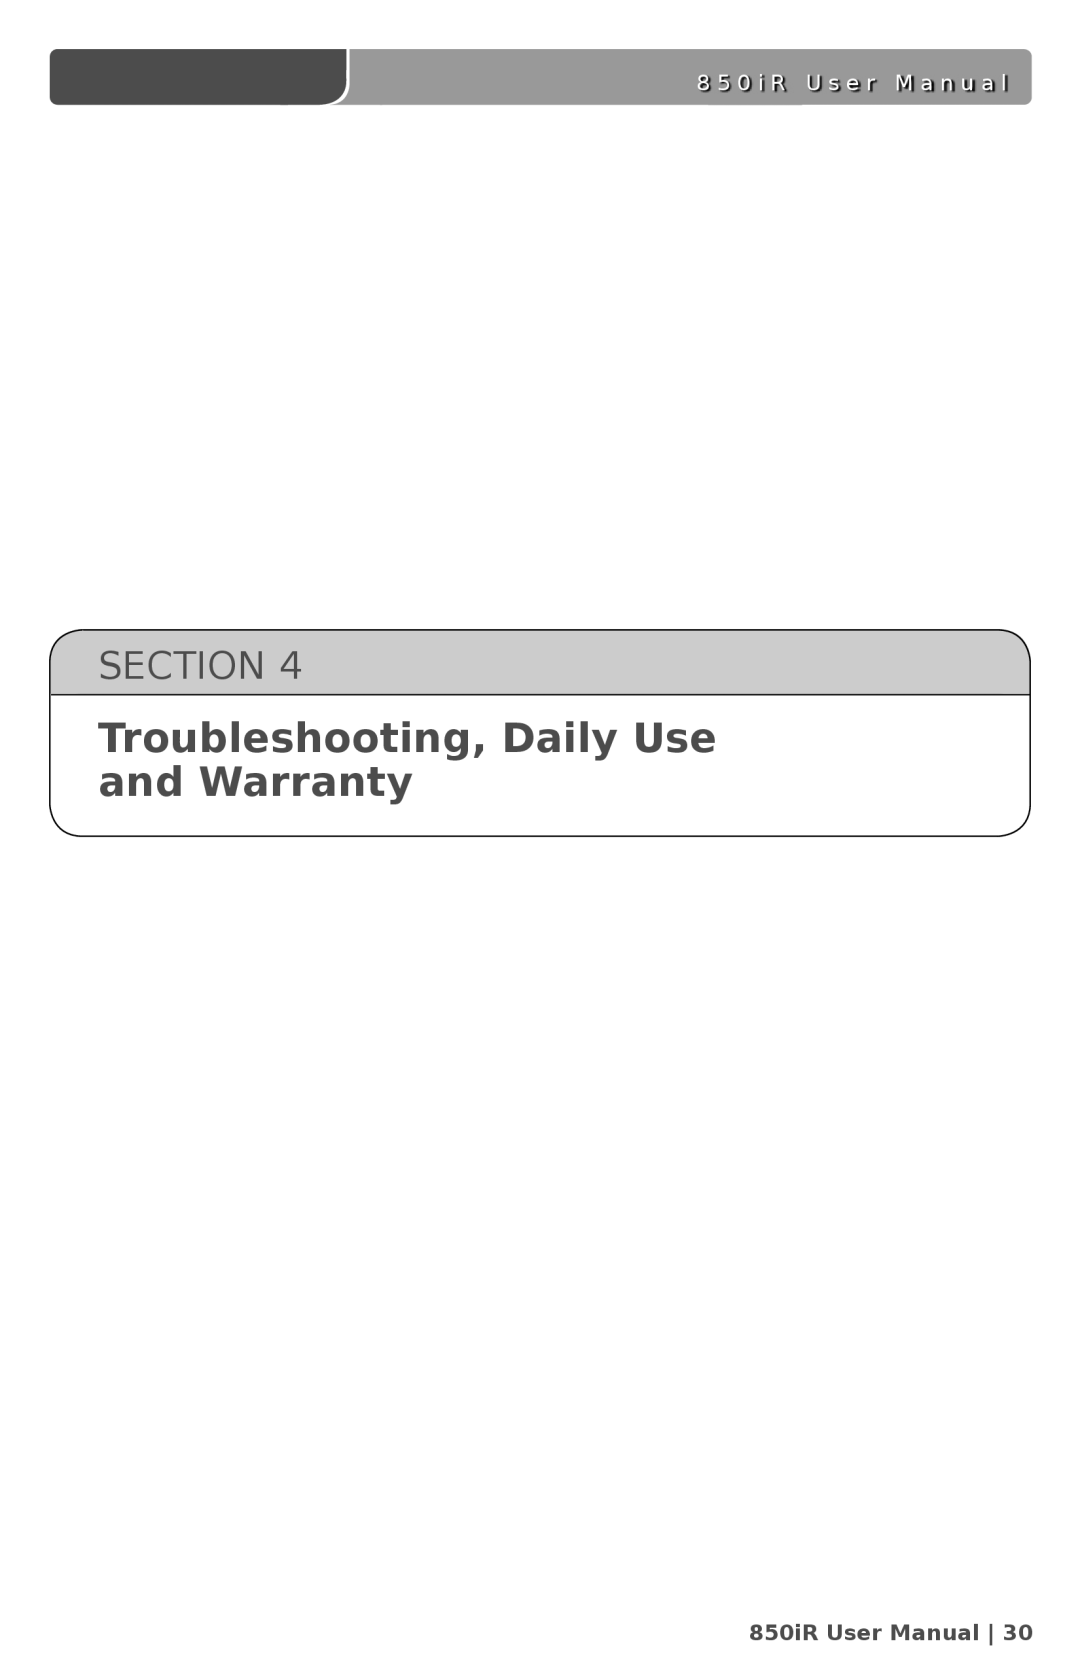 LightSpeed Technologies 850iR user manual Troubleshooting, Daily Use and Warranty, Section, 8 5 0 i R U s e r M a n u a l 